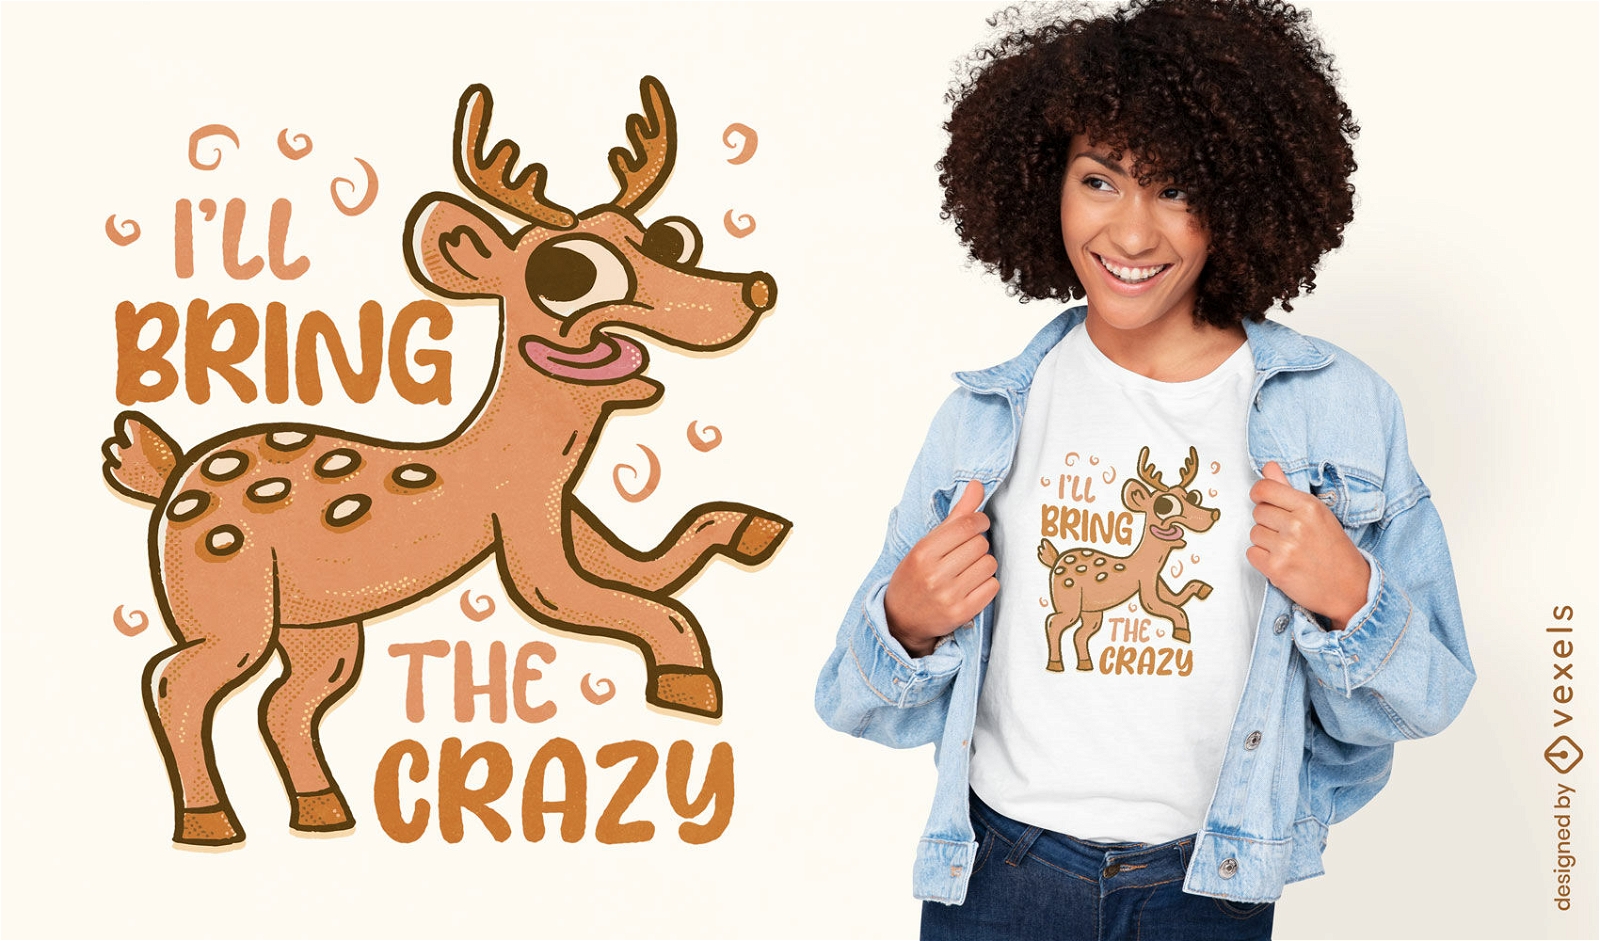 Crazy reindeer t-shirt design